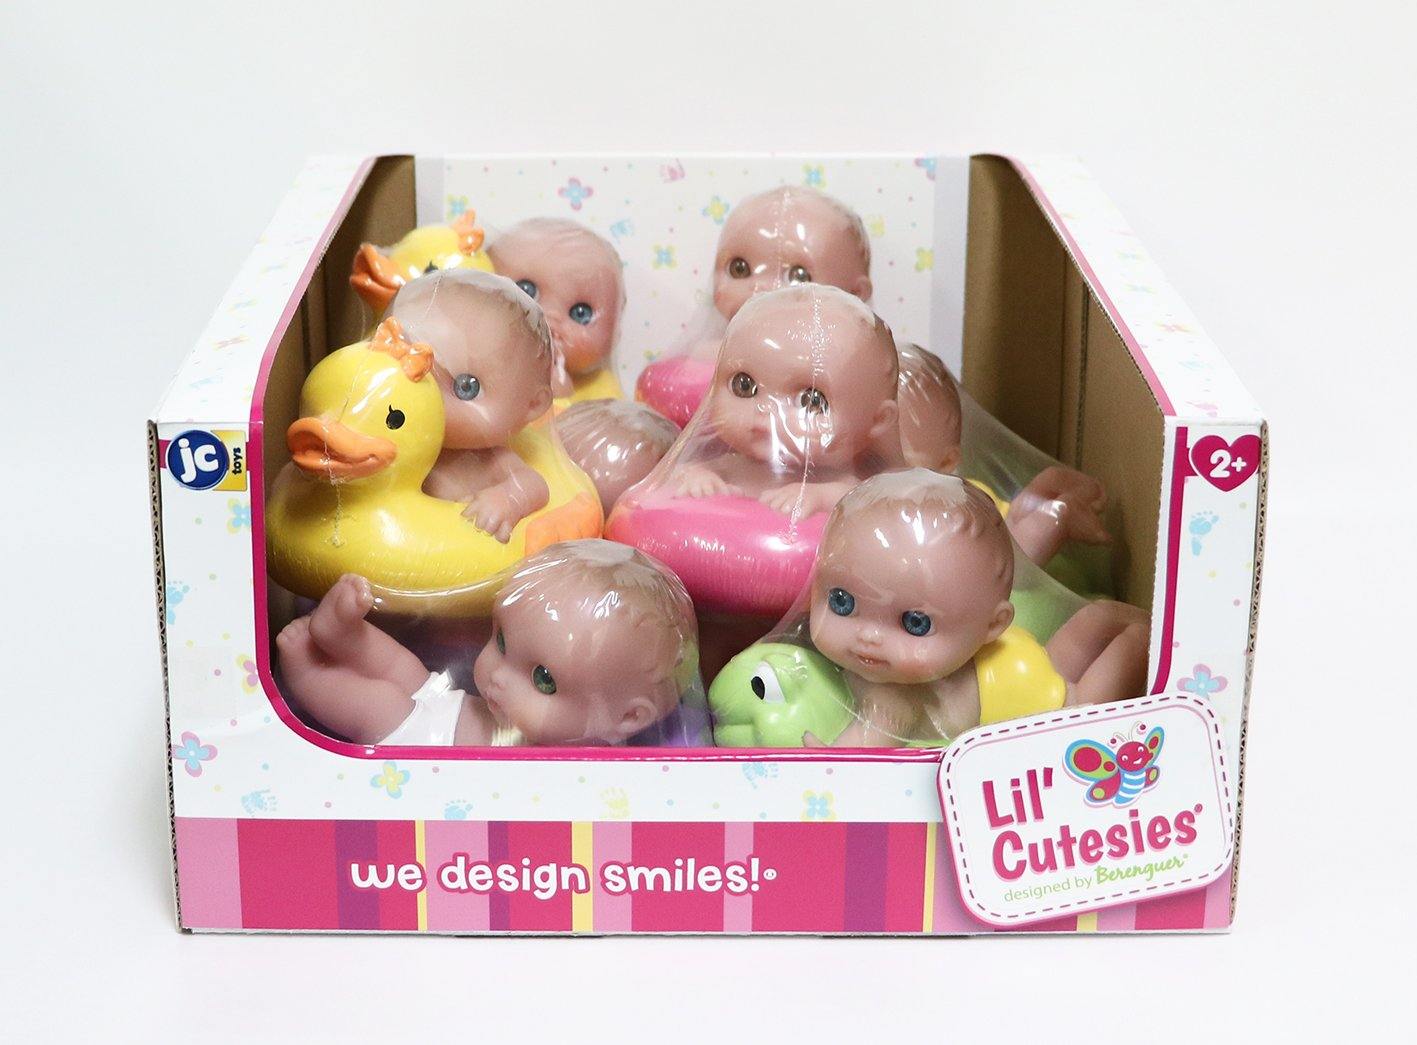 Lil' Cutesies 5" All Vinyl Bath Doll and Accessory Floaties Assortment - JC Toys Group Inc.